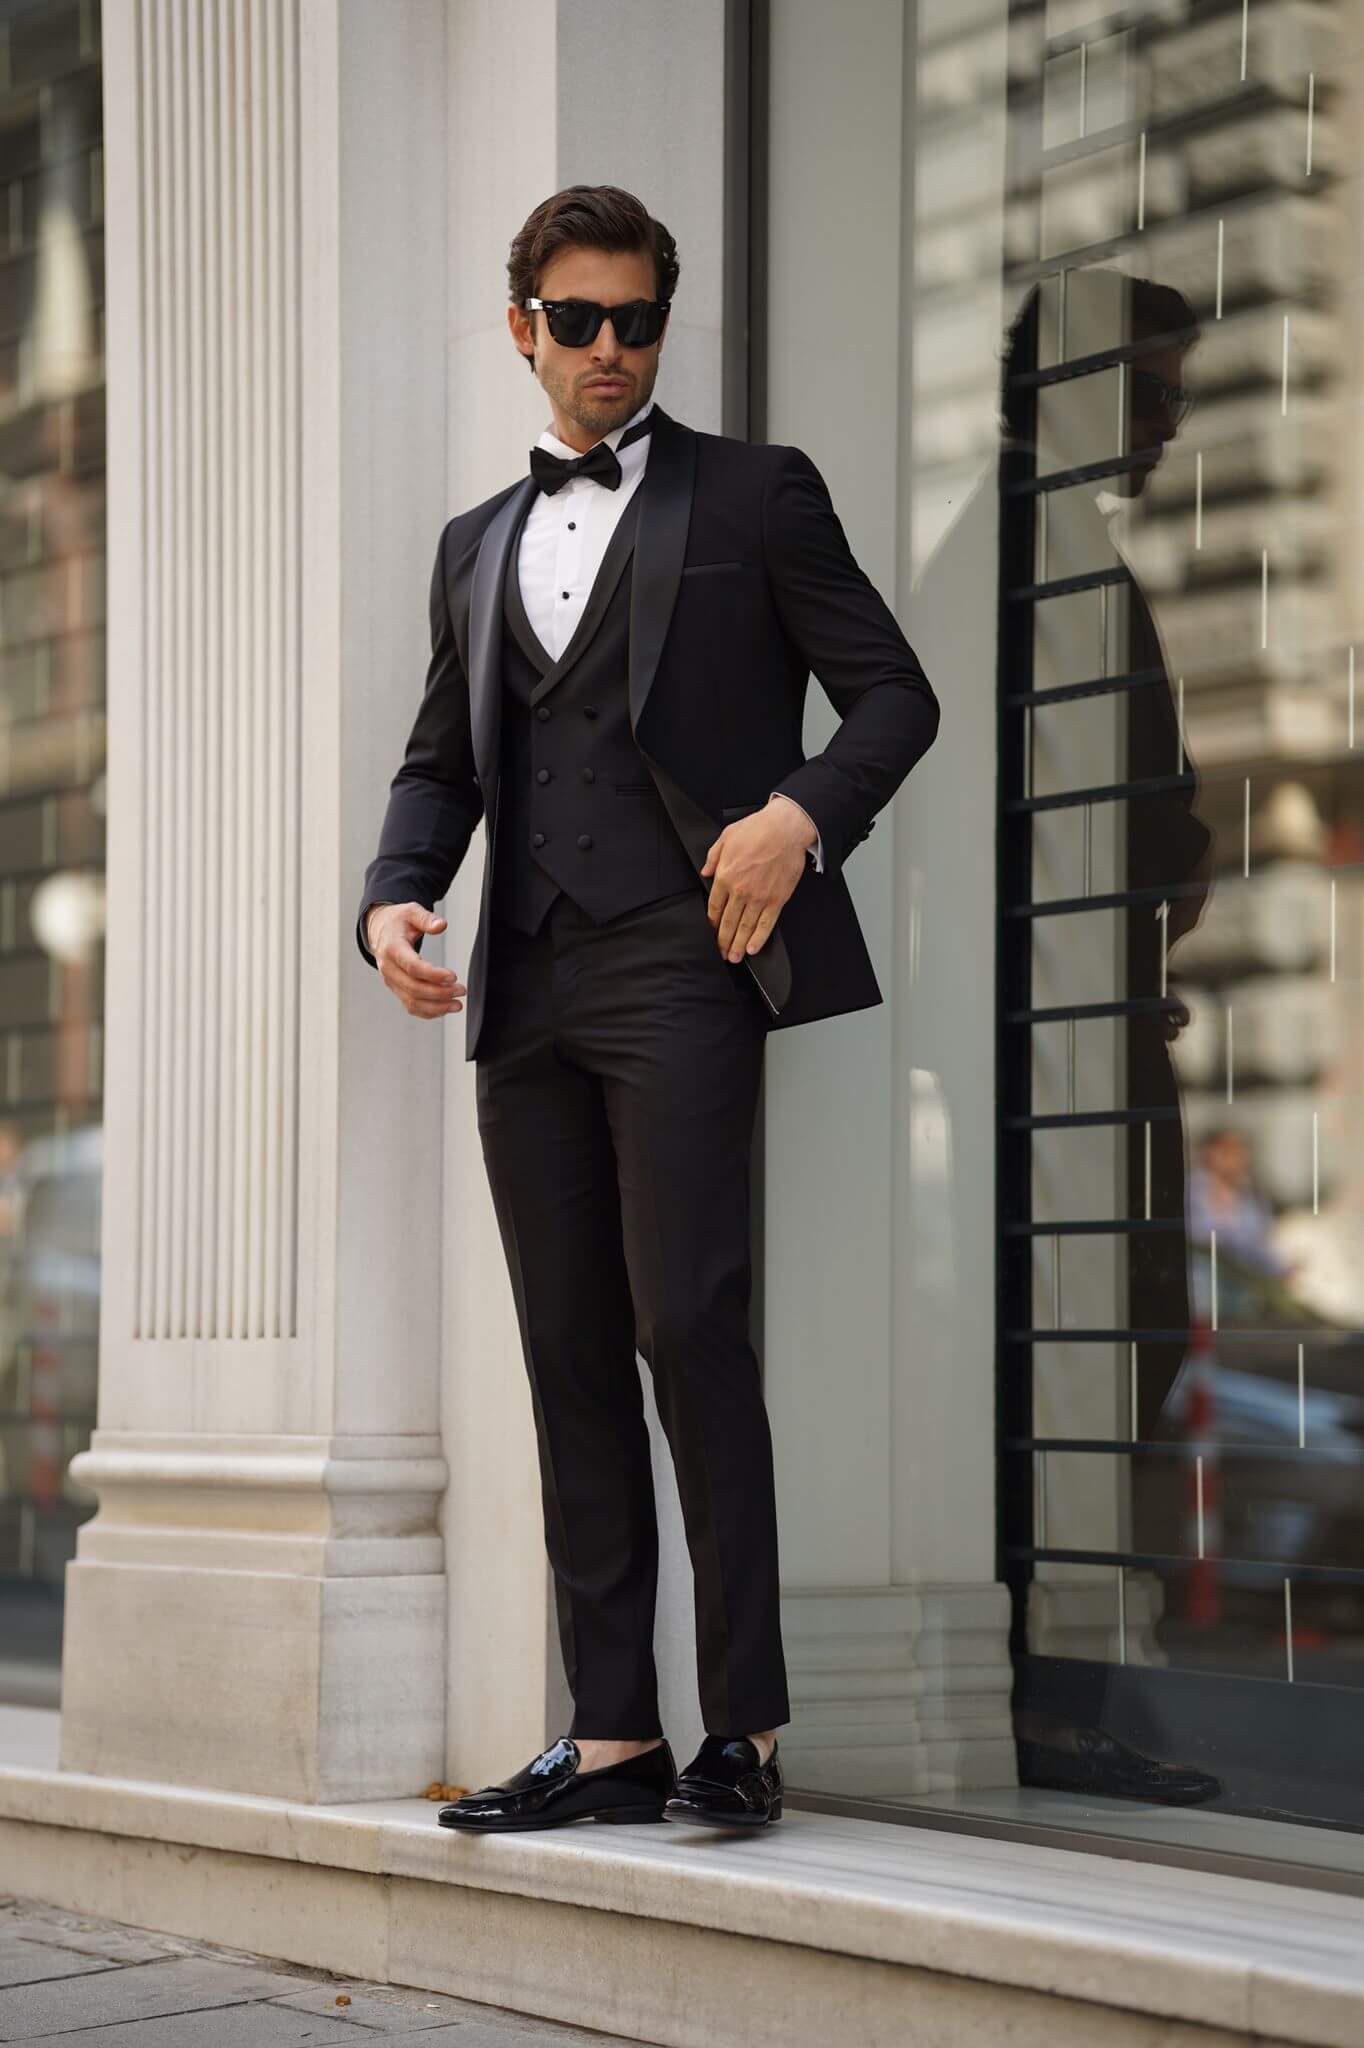 A Slim-Fit Shawl Collar Black Tuxedo Suit on display.